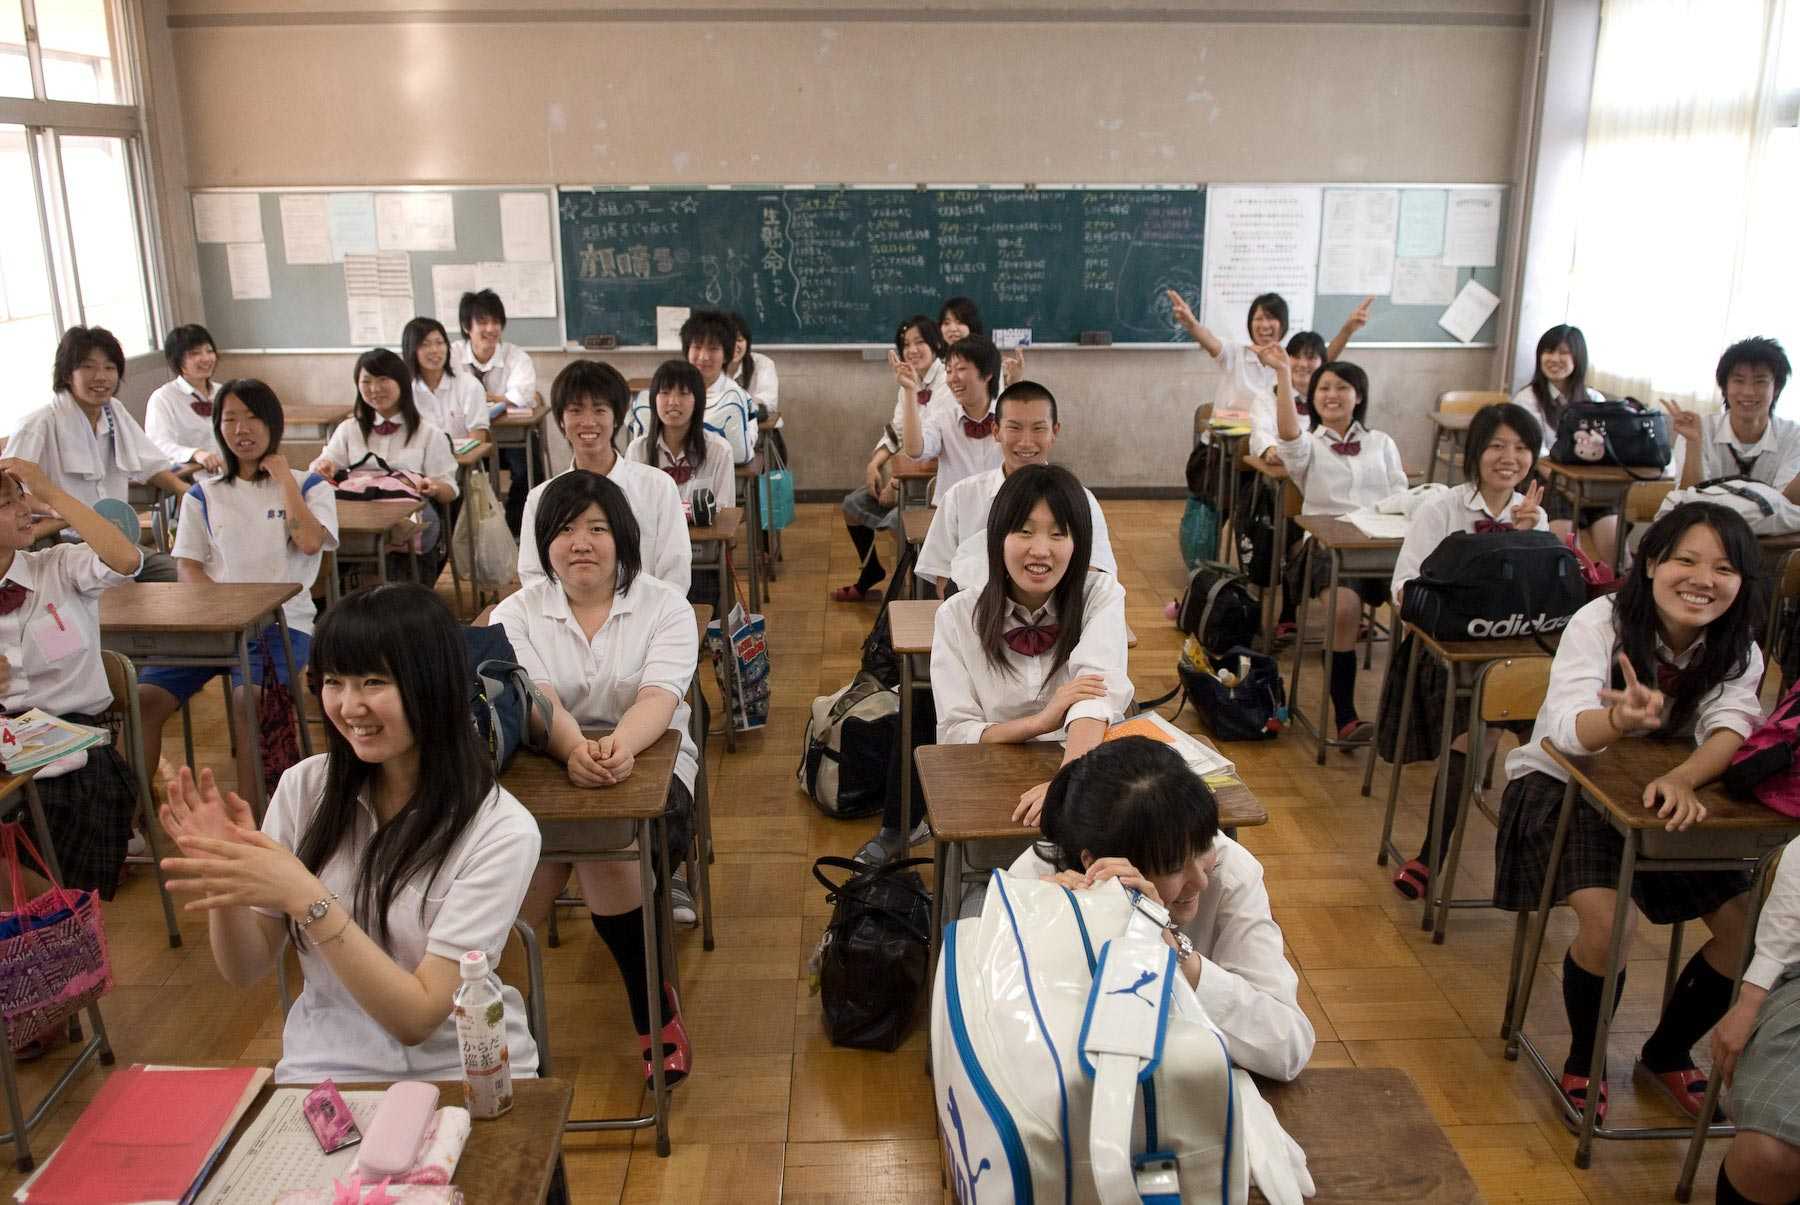 Список средних школ в японии - list of high schools in japan - qaz.wiki